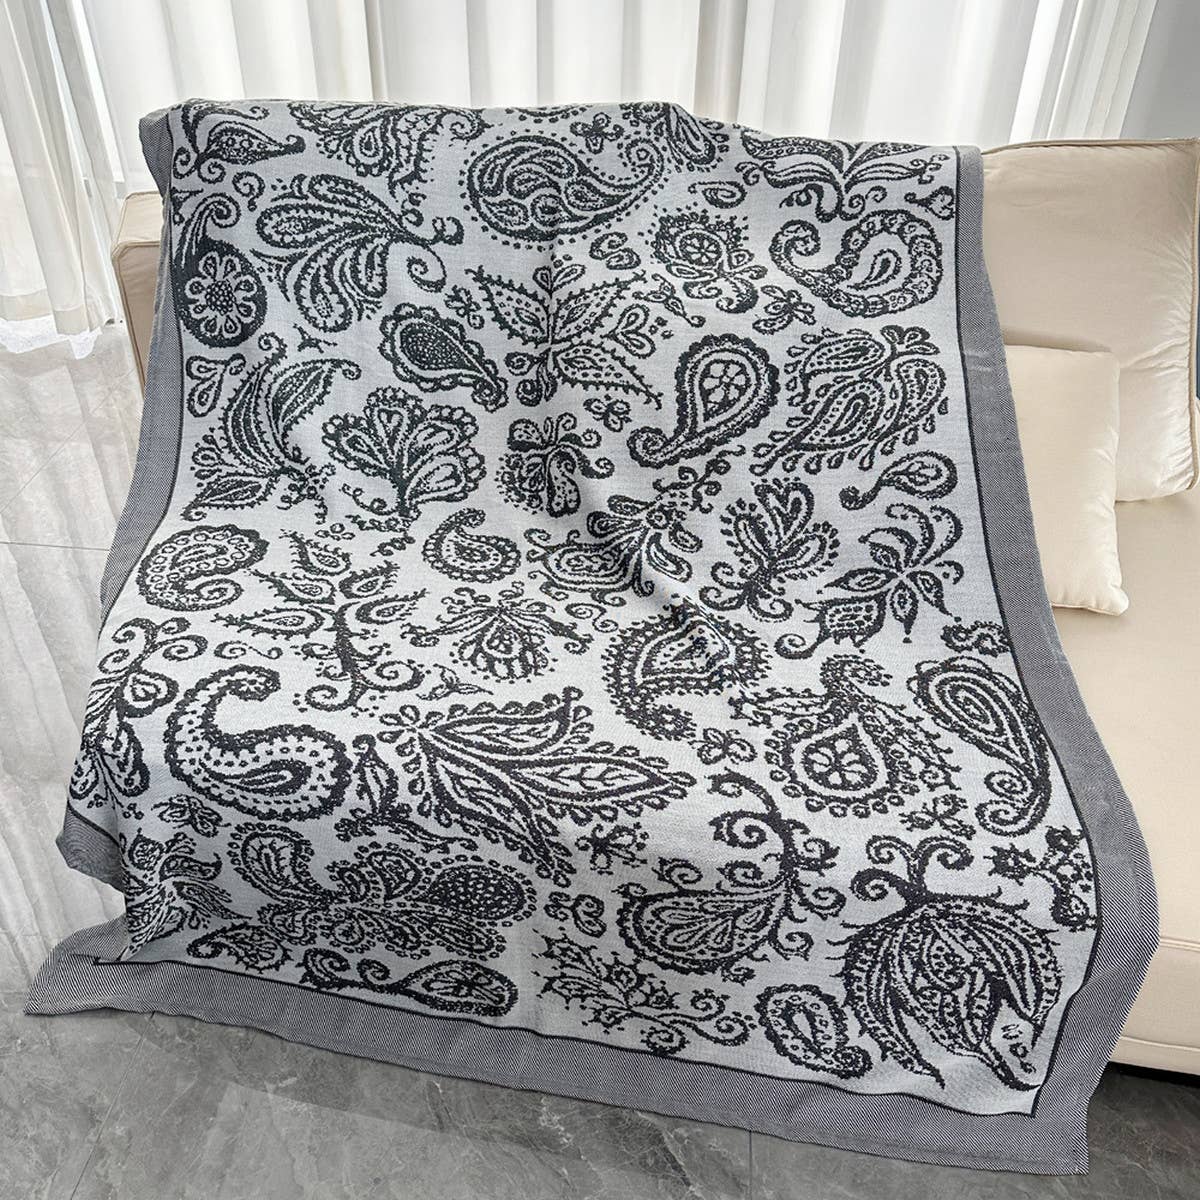 Printed Woven Blanket in Grey